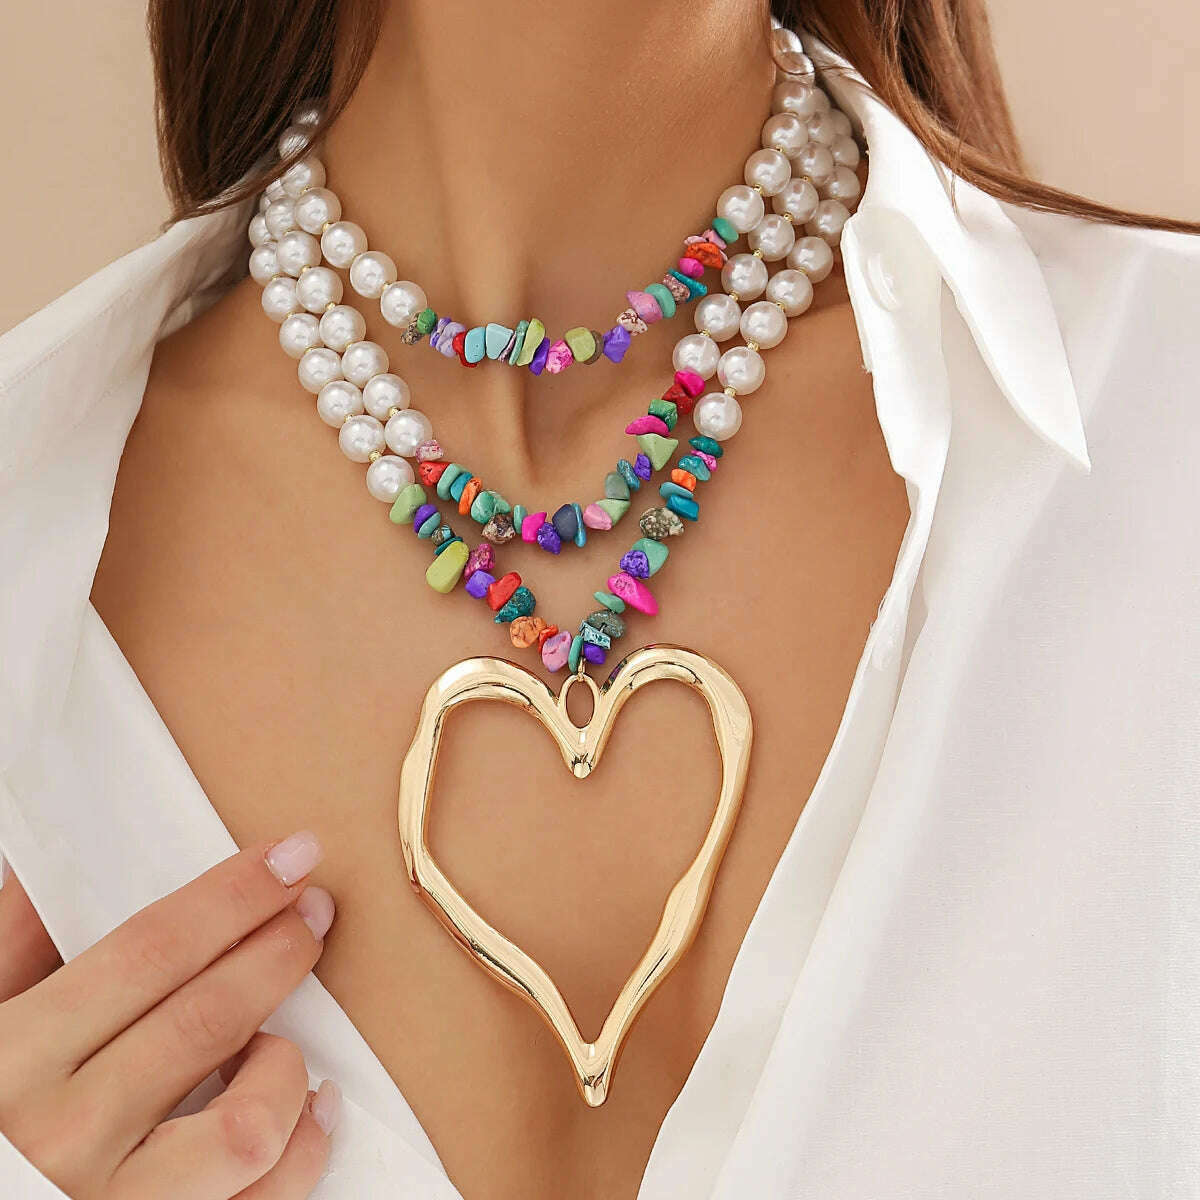 KIMLUD, Ingemark Elegant Big Love Heart Pendant Choker Necklace for Women Multilayer Imitation Pearl Chain Grunge Jewelry Steampunk Gift, KIMLUD Women's Clothes